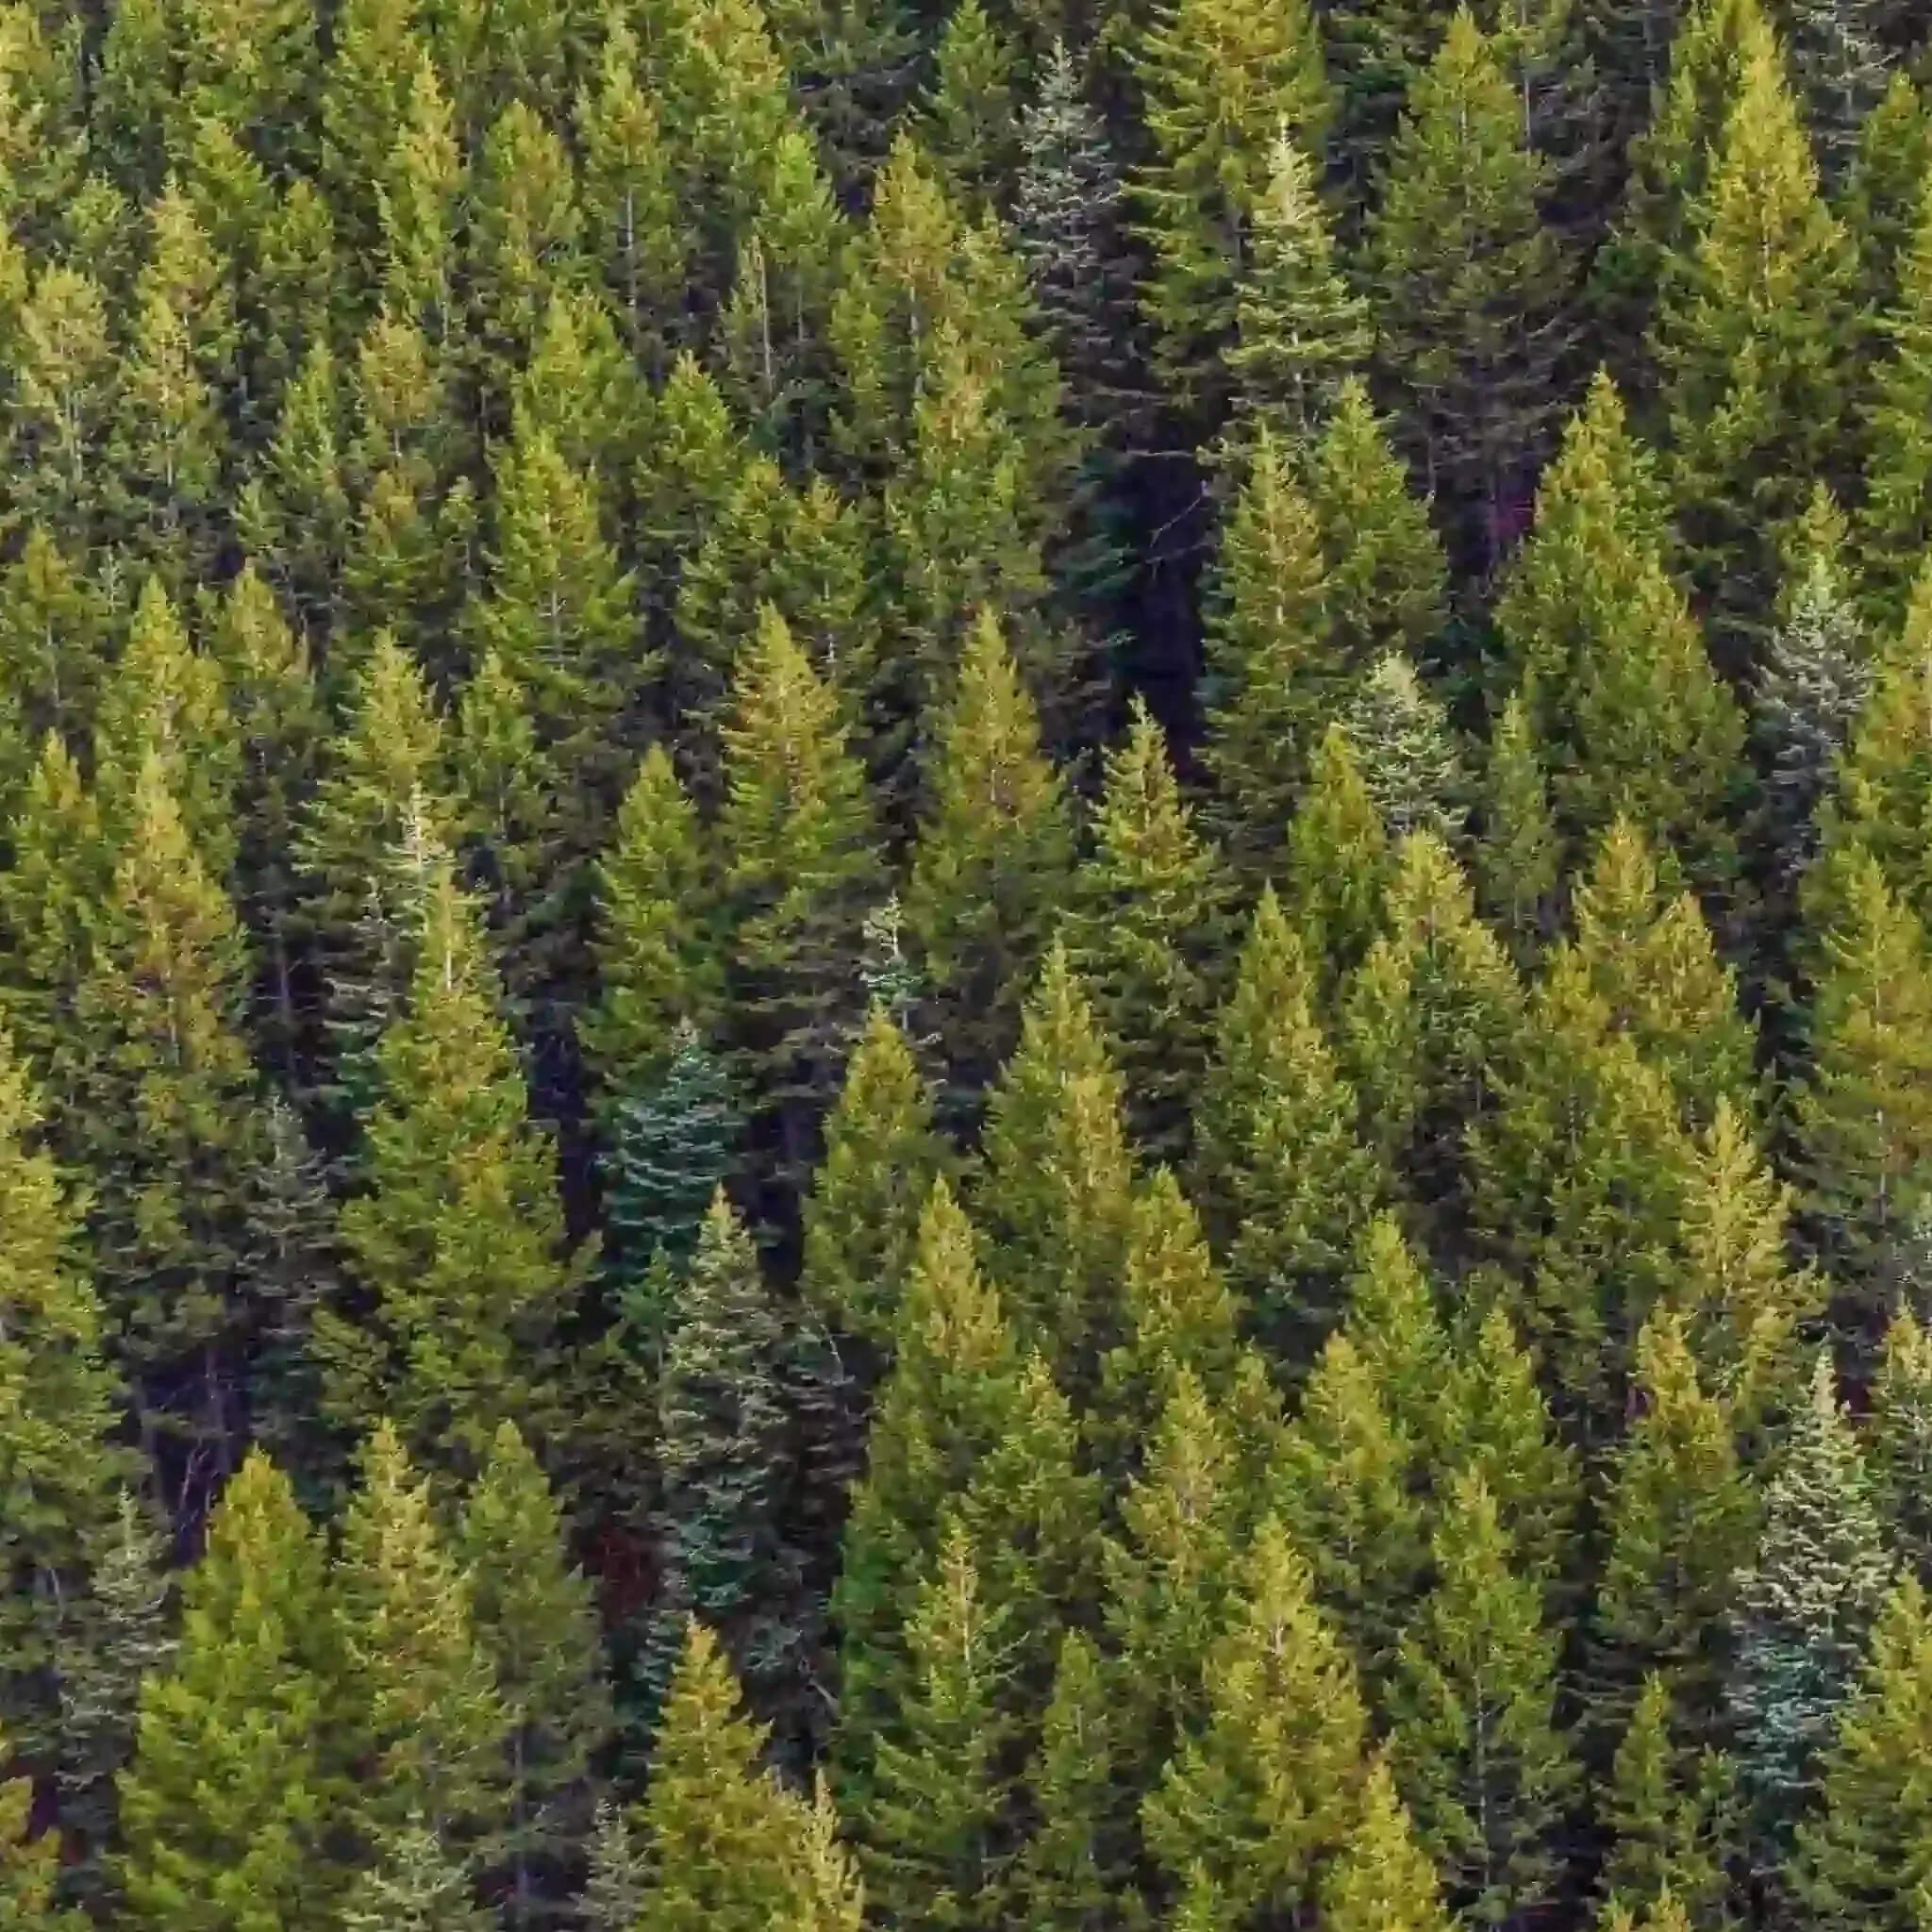 Save trees image